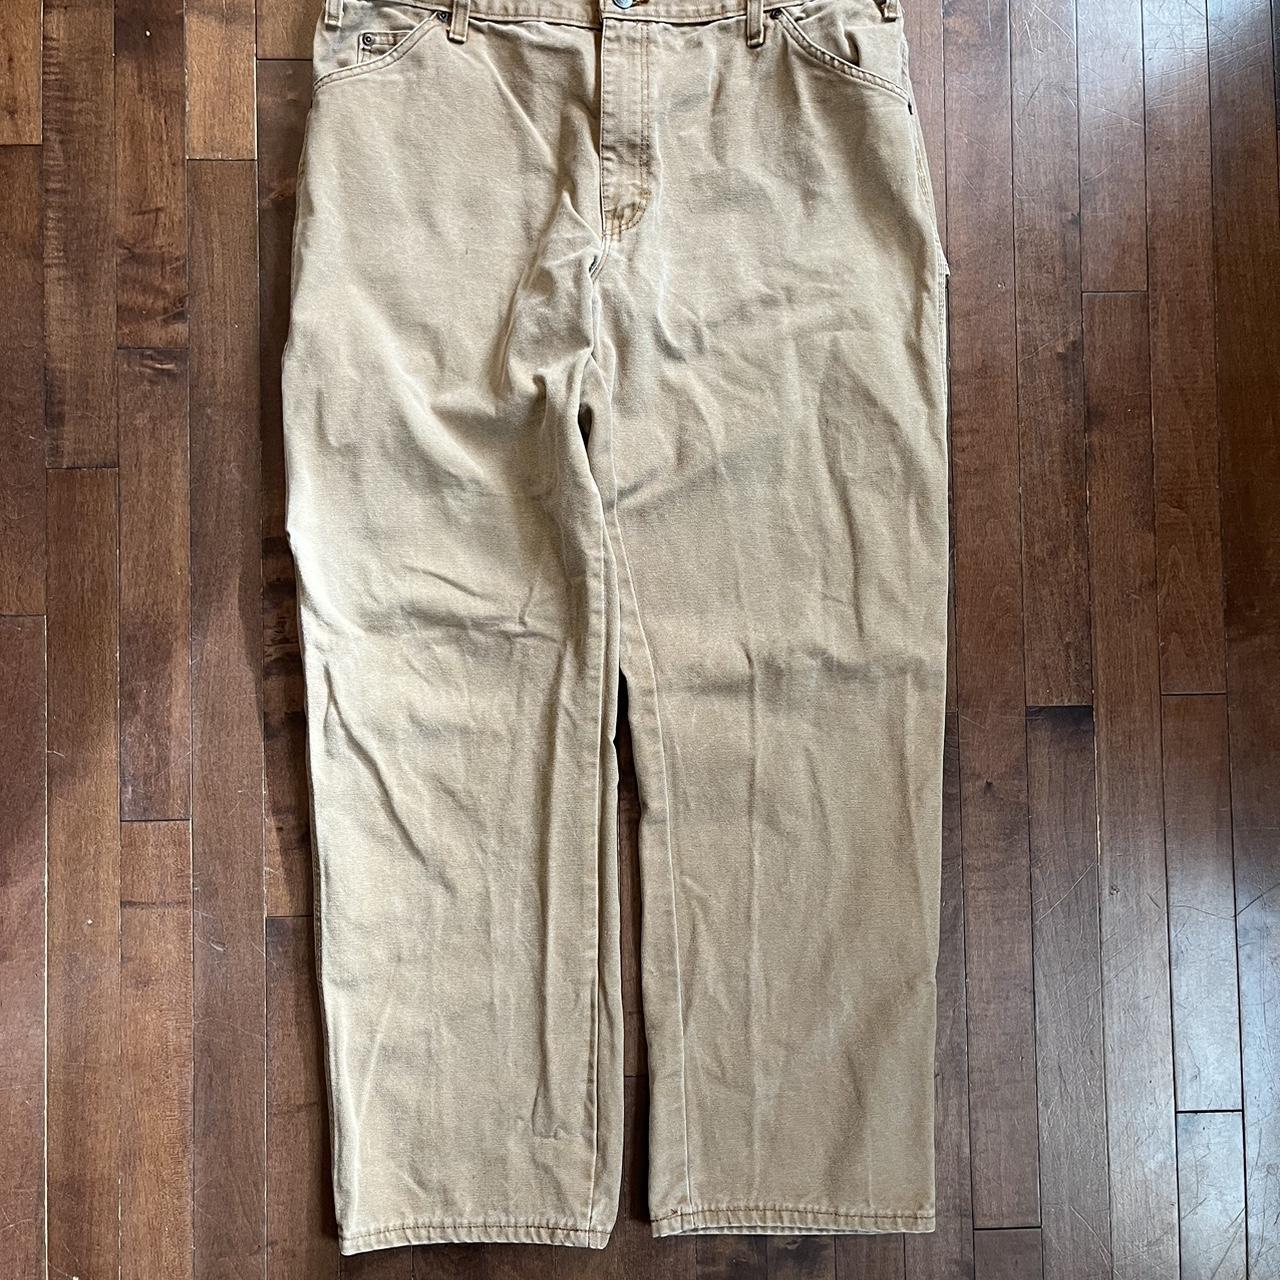 khaki colored dickies pants size 38W 32L - Depop